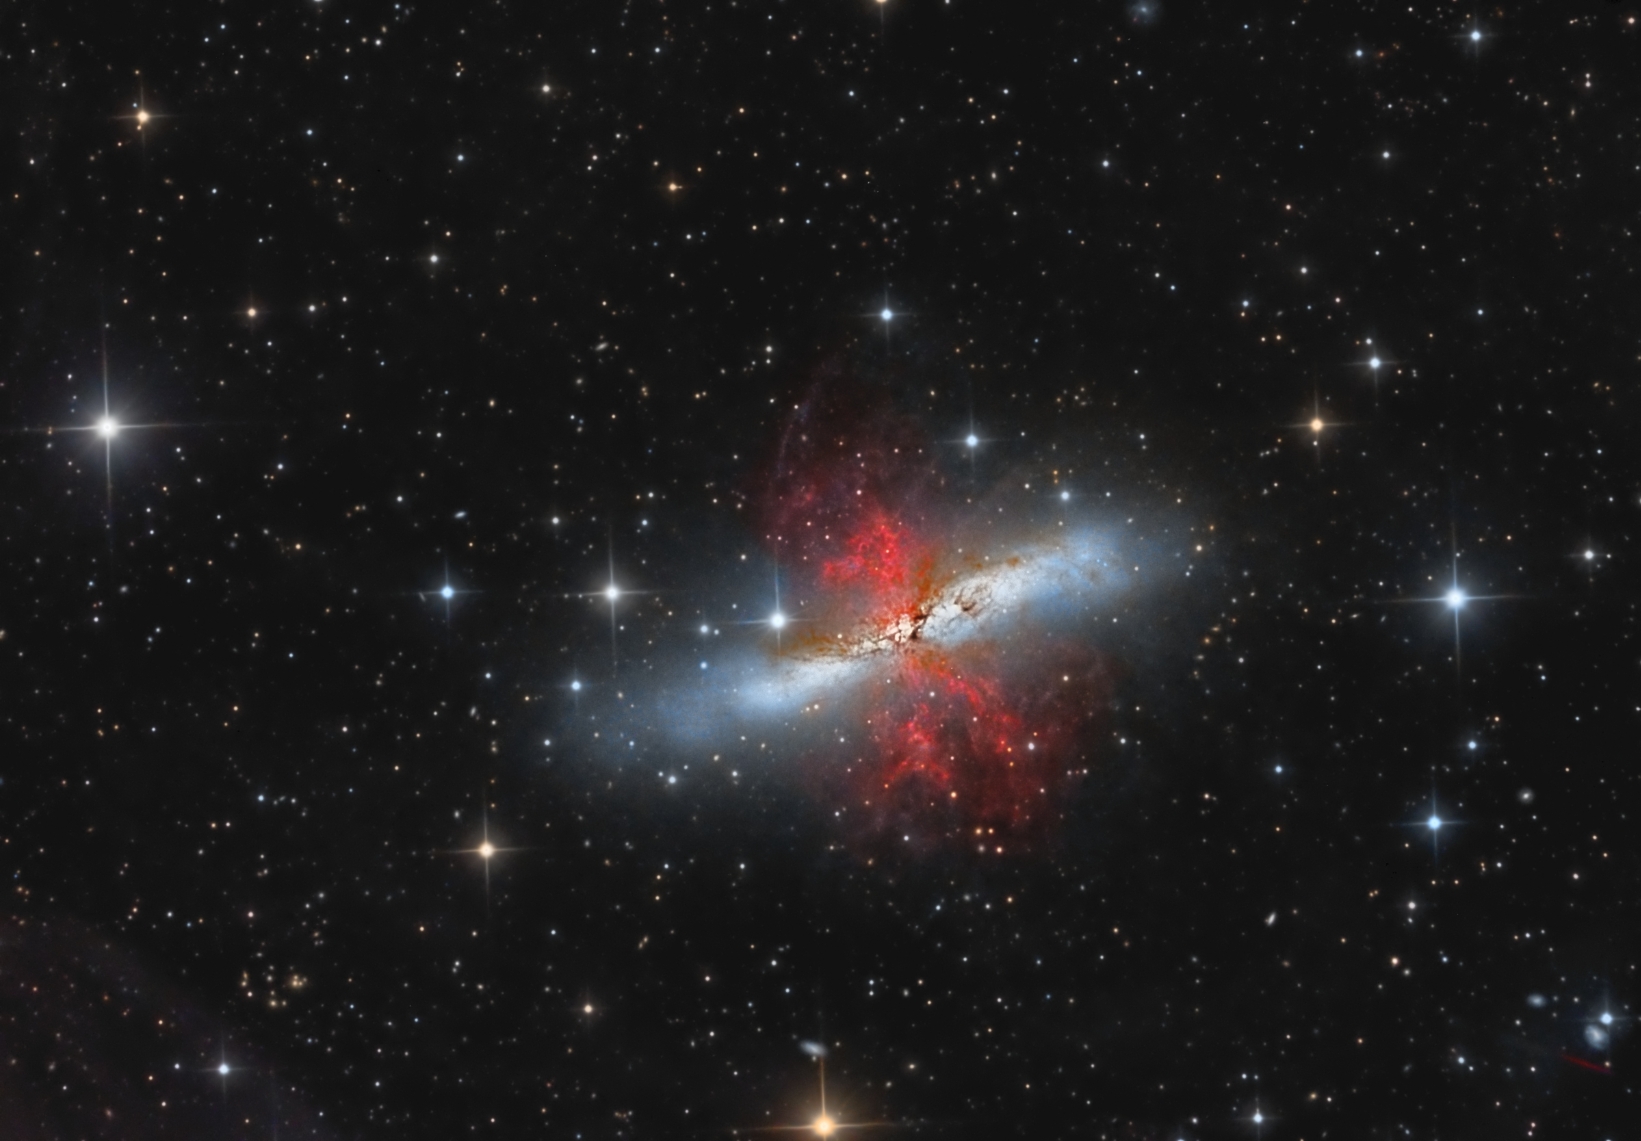 Starburst galaxy M 82 (The Cigar Galaxy)